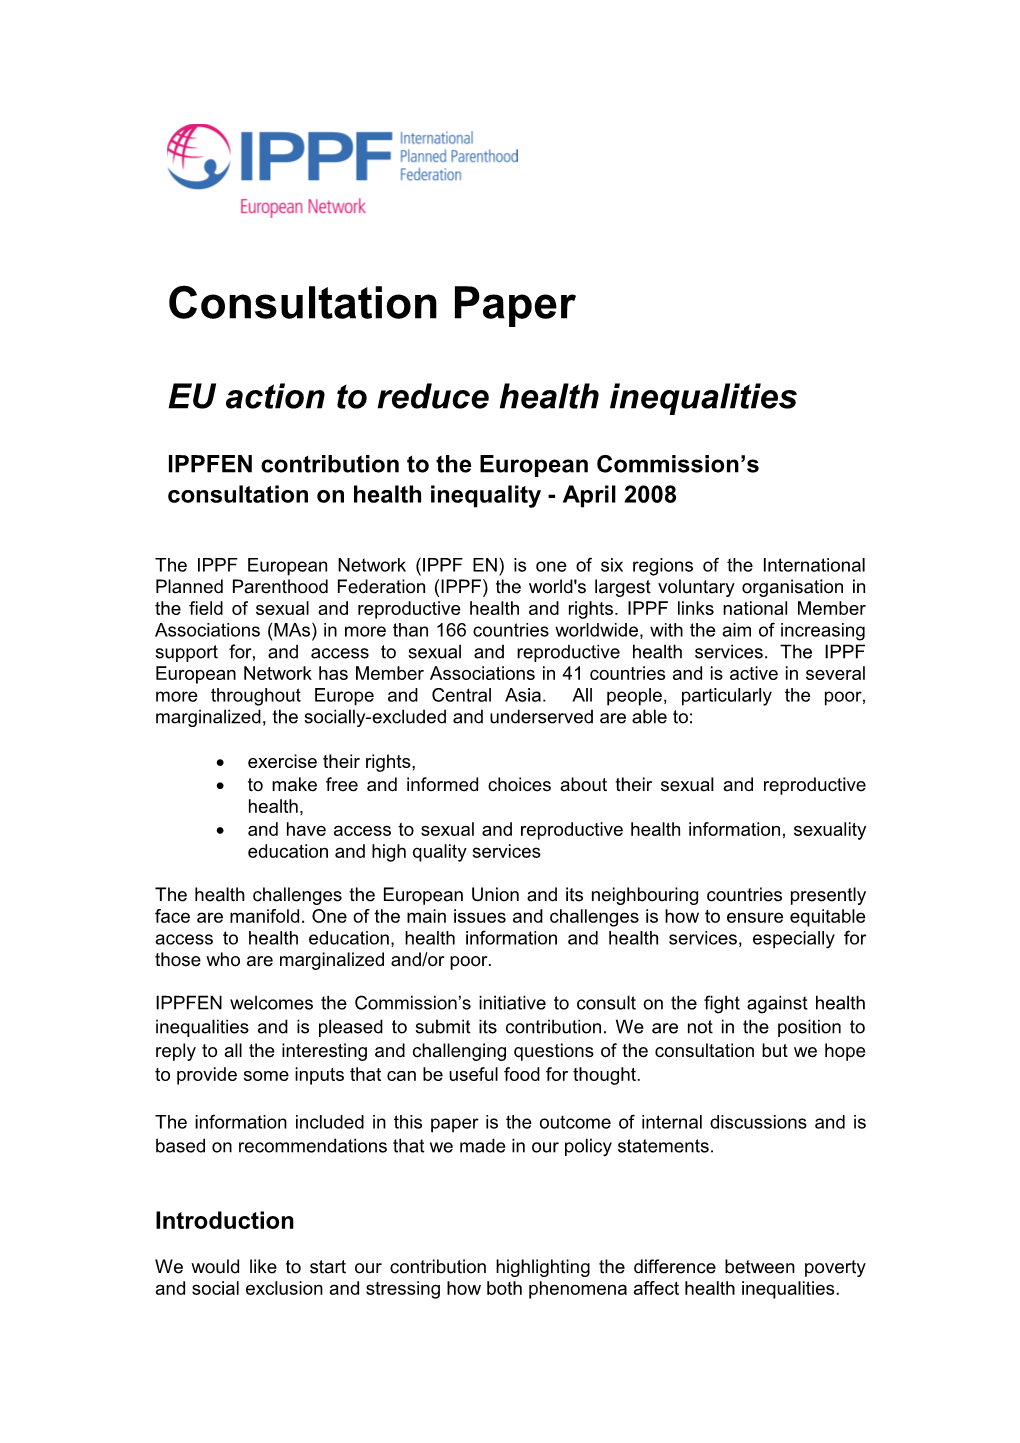 EU Action to Reduce Health Inequalities